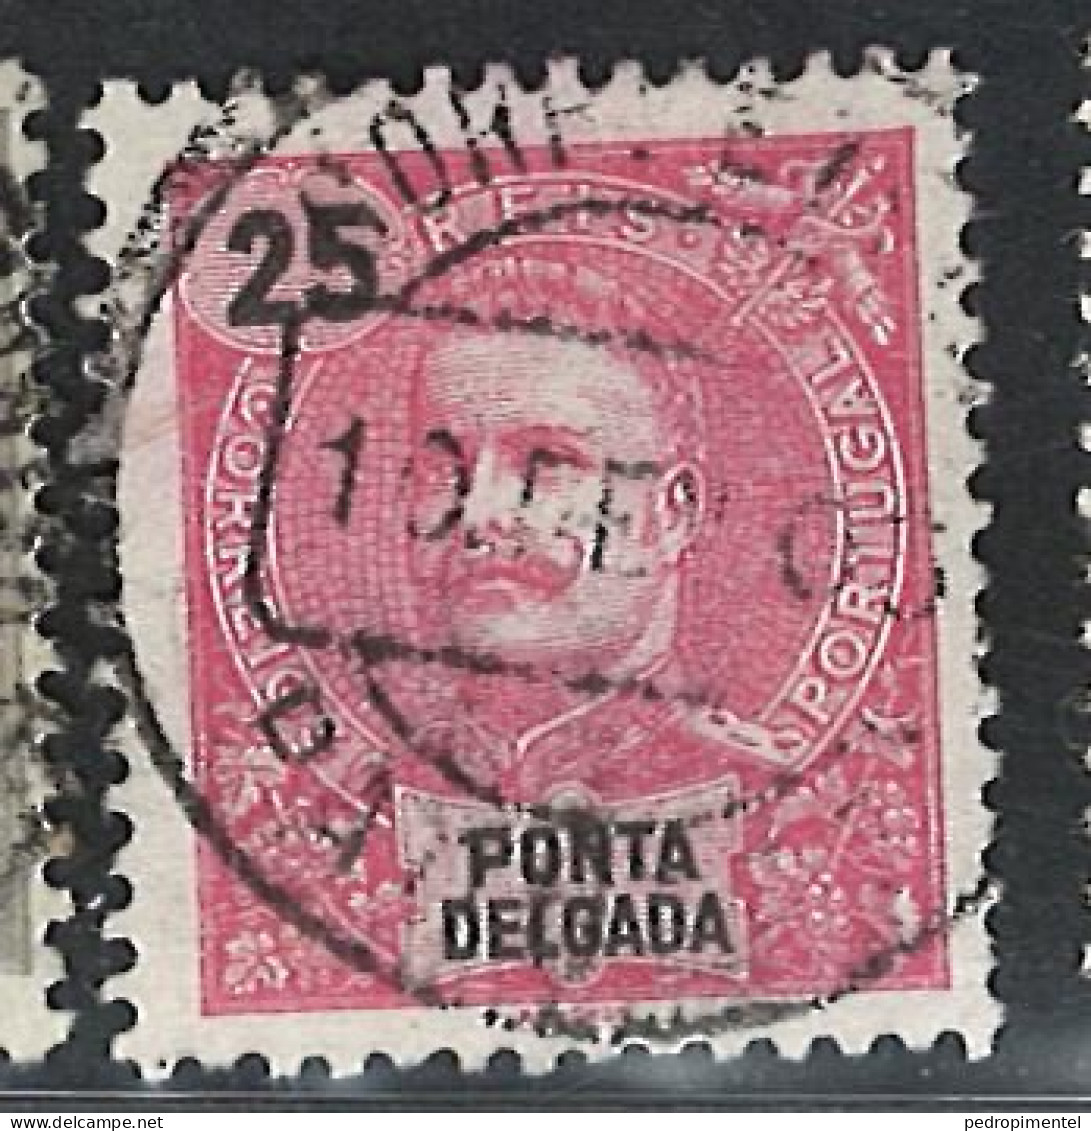 Portugal Azores Ponta Delgada Stamps |1898-1905 | King D. Carlos I 25r | #28 | Used - Ponta Delgada